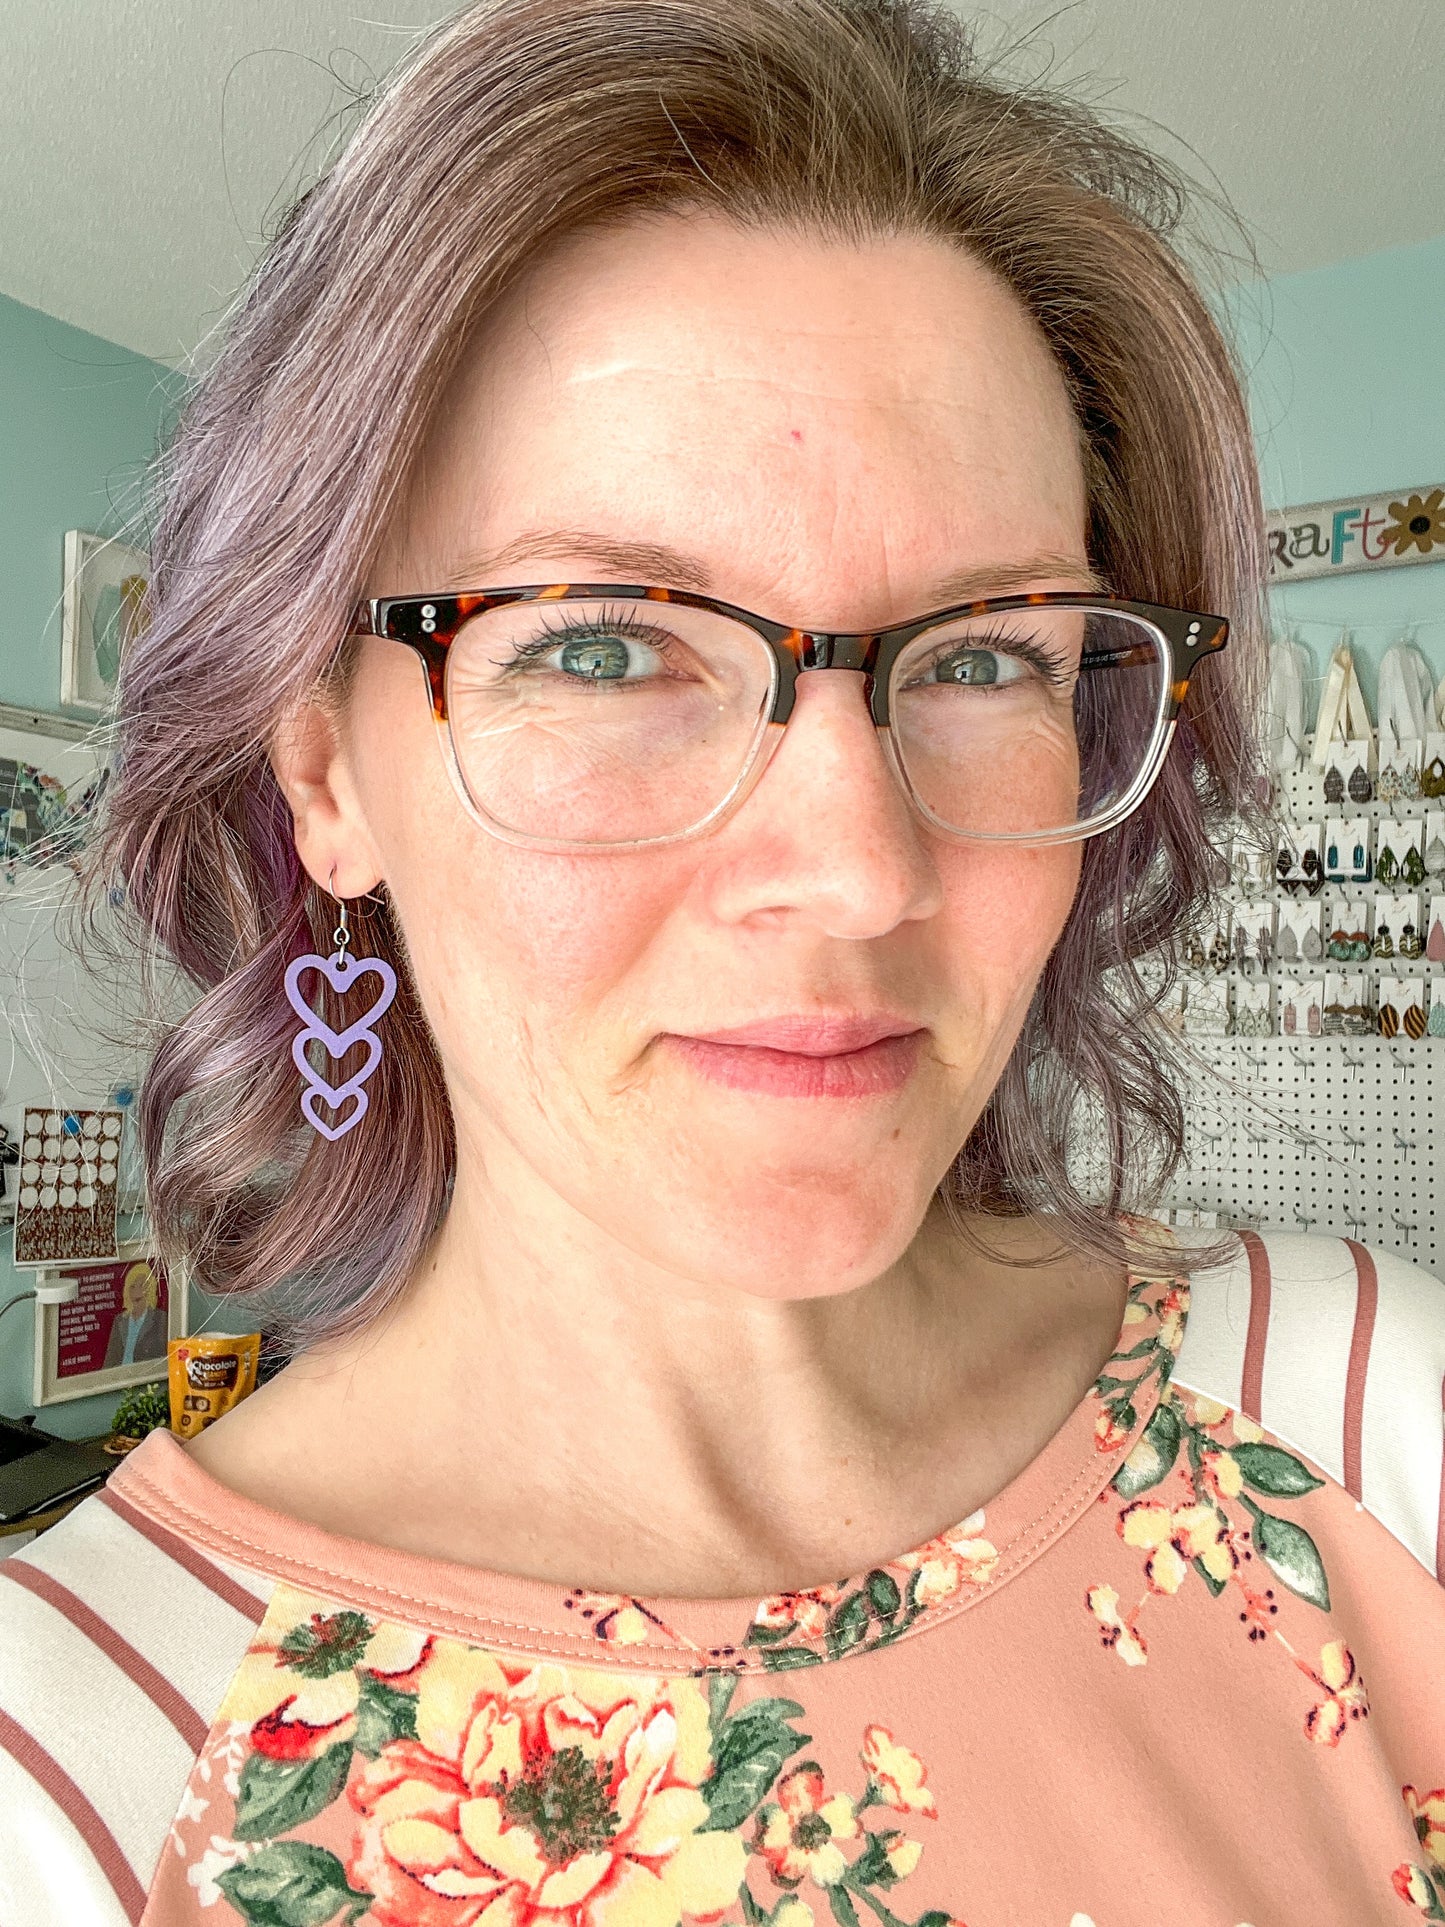 Wood Earrings - Purple Stacked Heart Dangles: Choose From 3 Designs